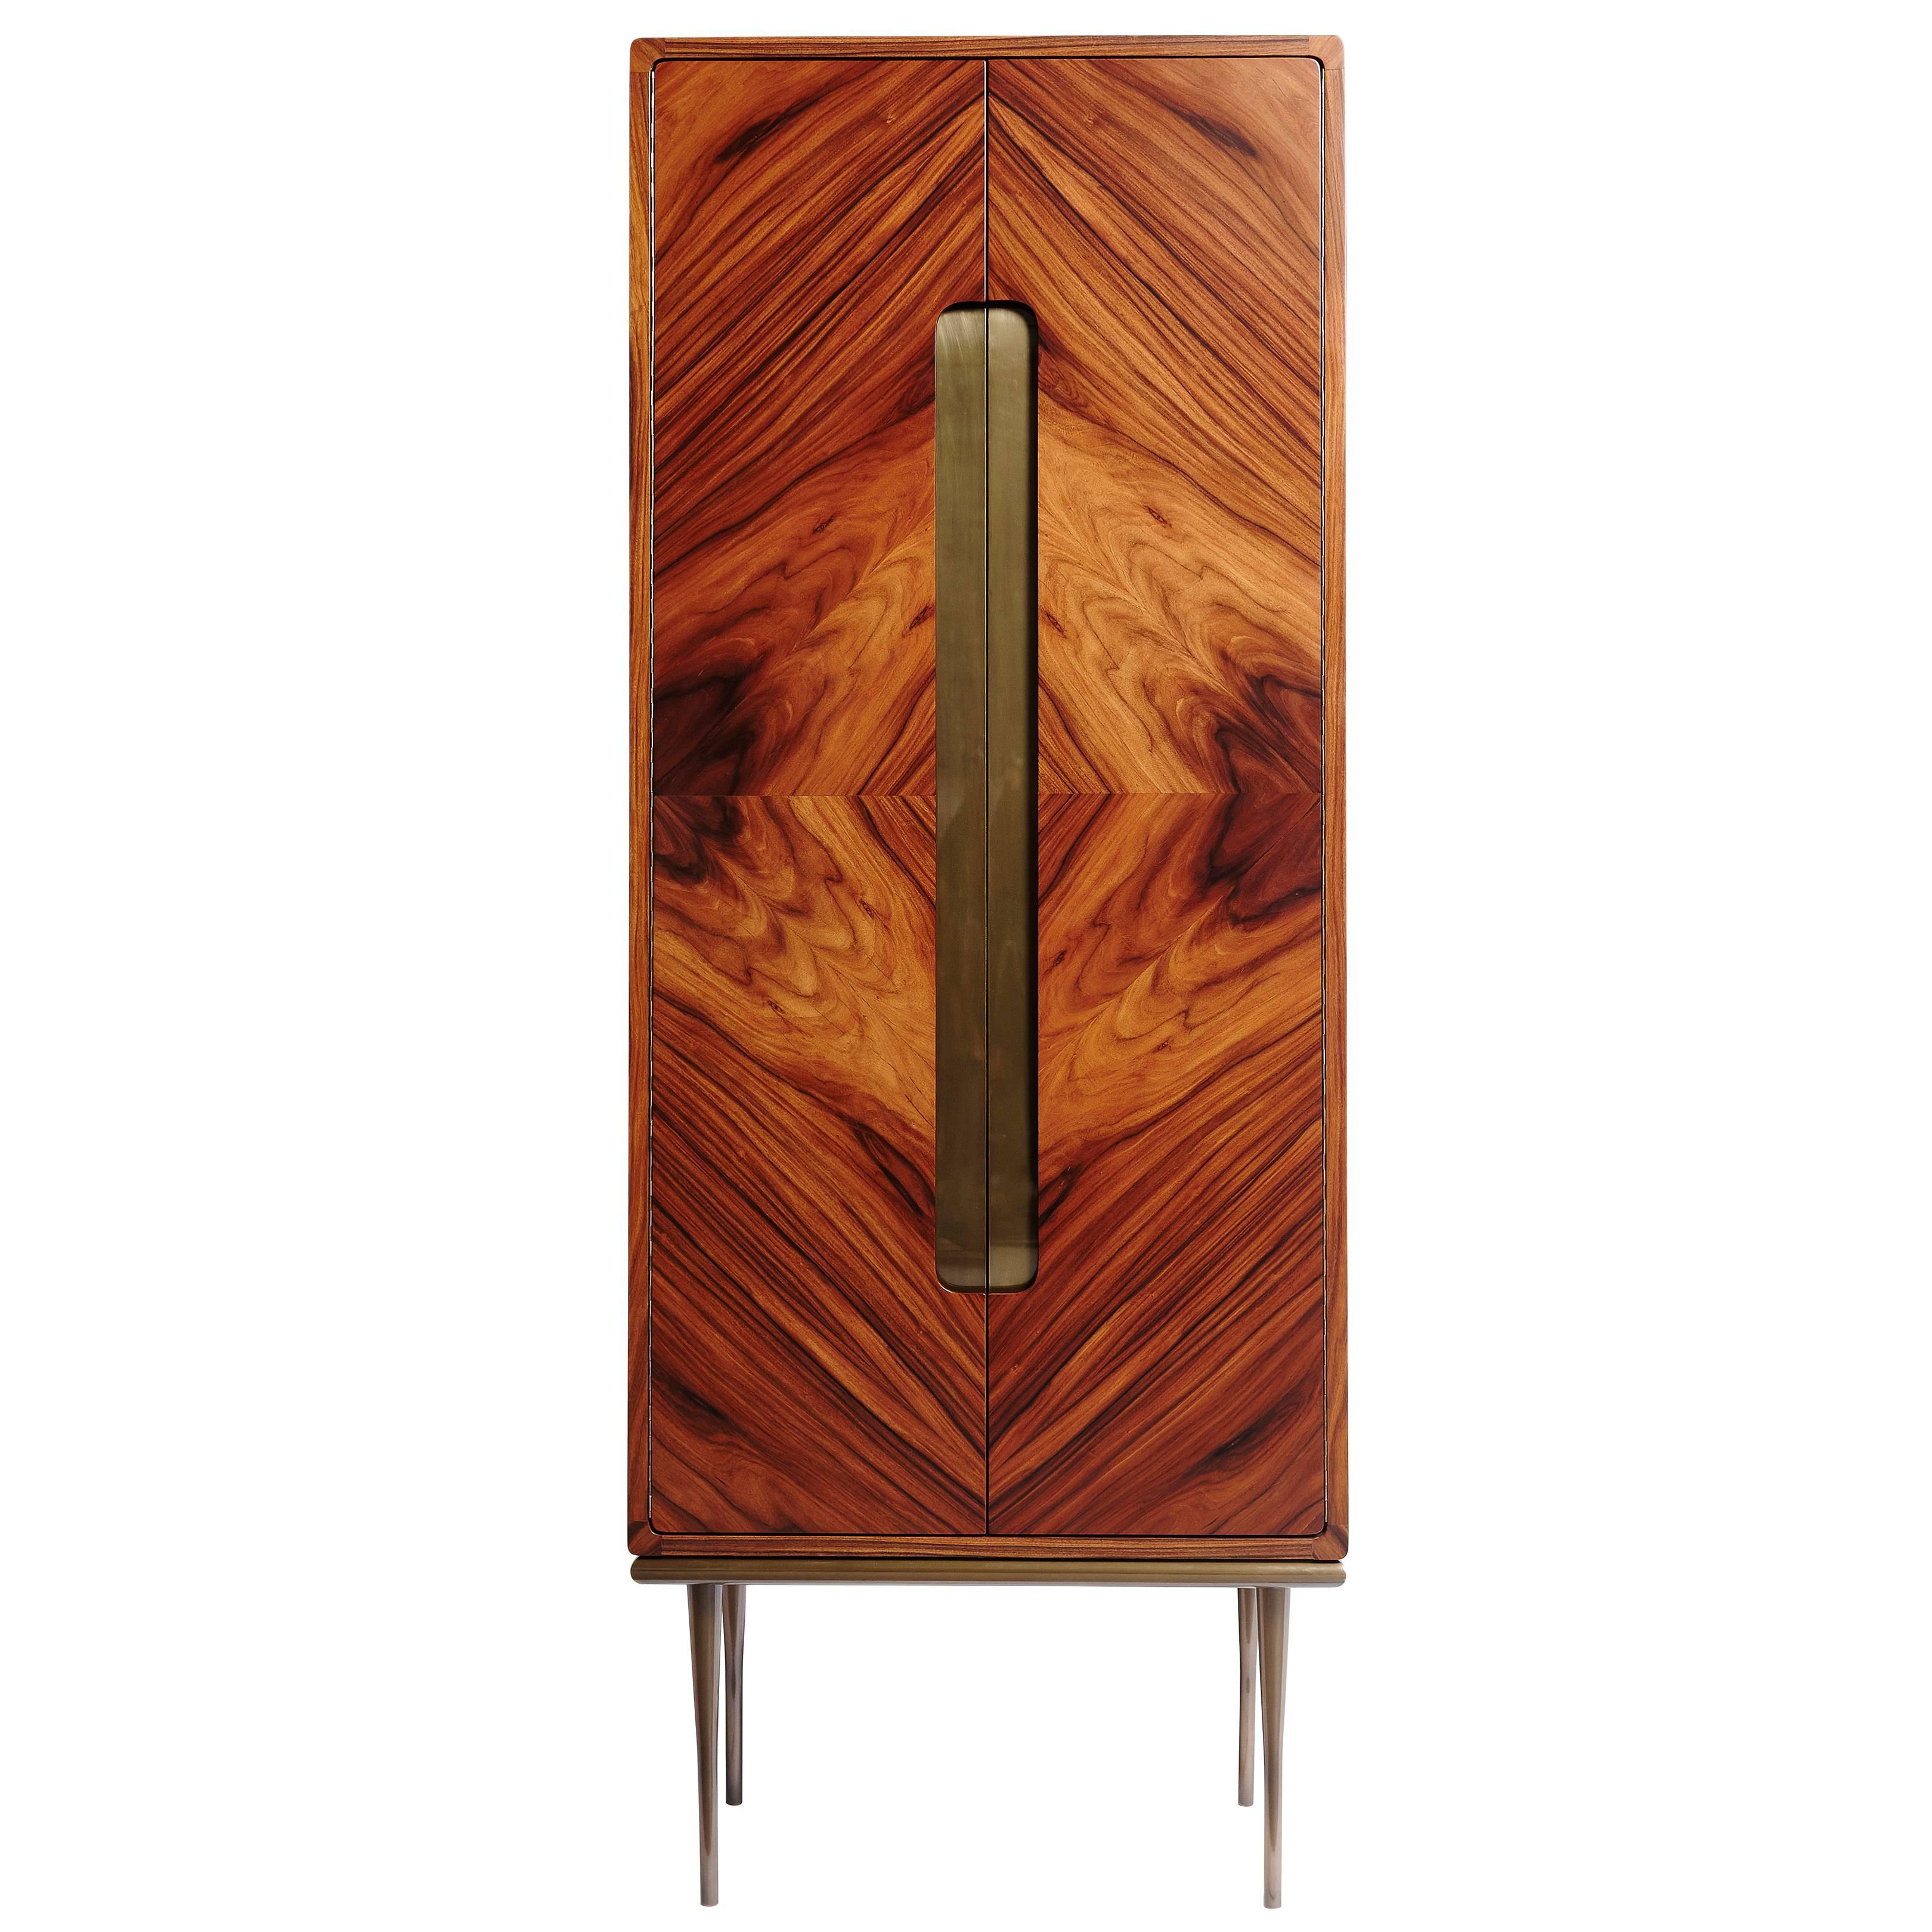 "DEVA" Contemporary Wood with Brass Details fully Handmade Bar